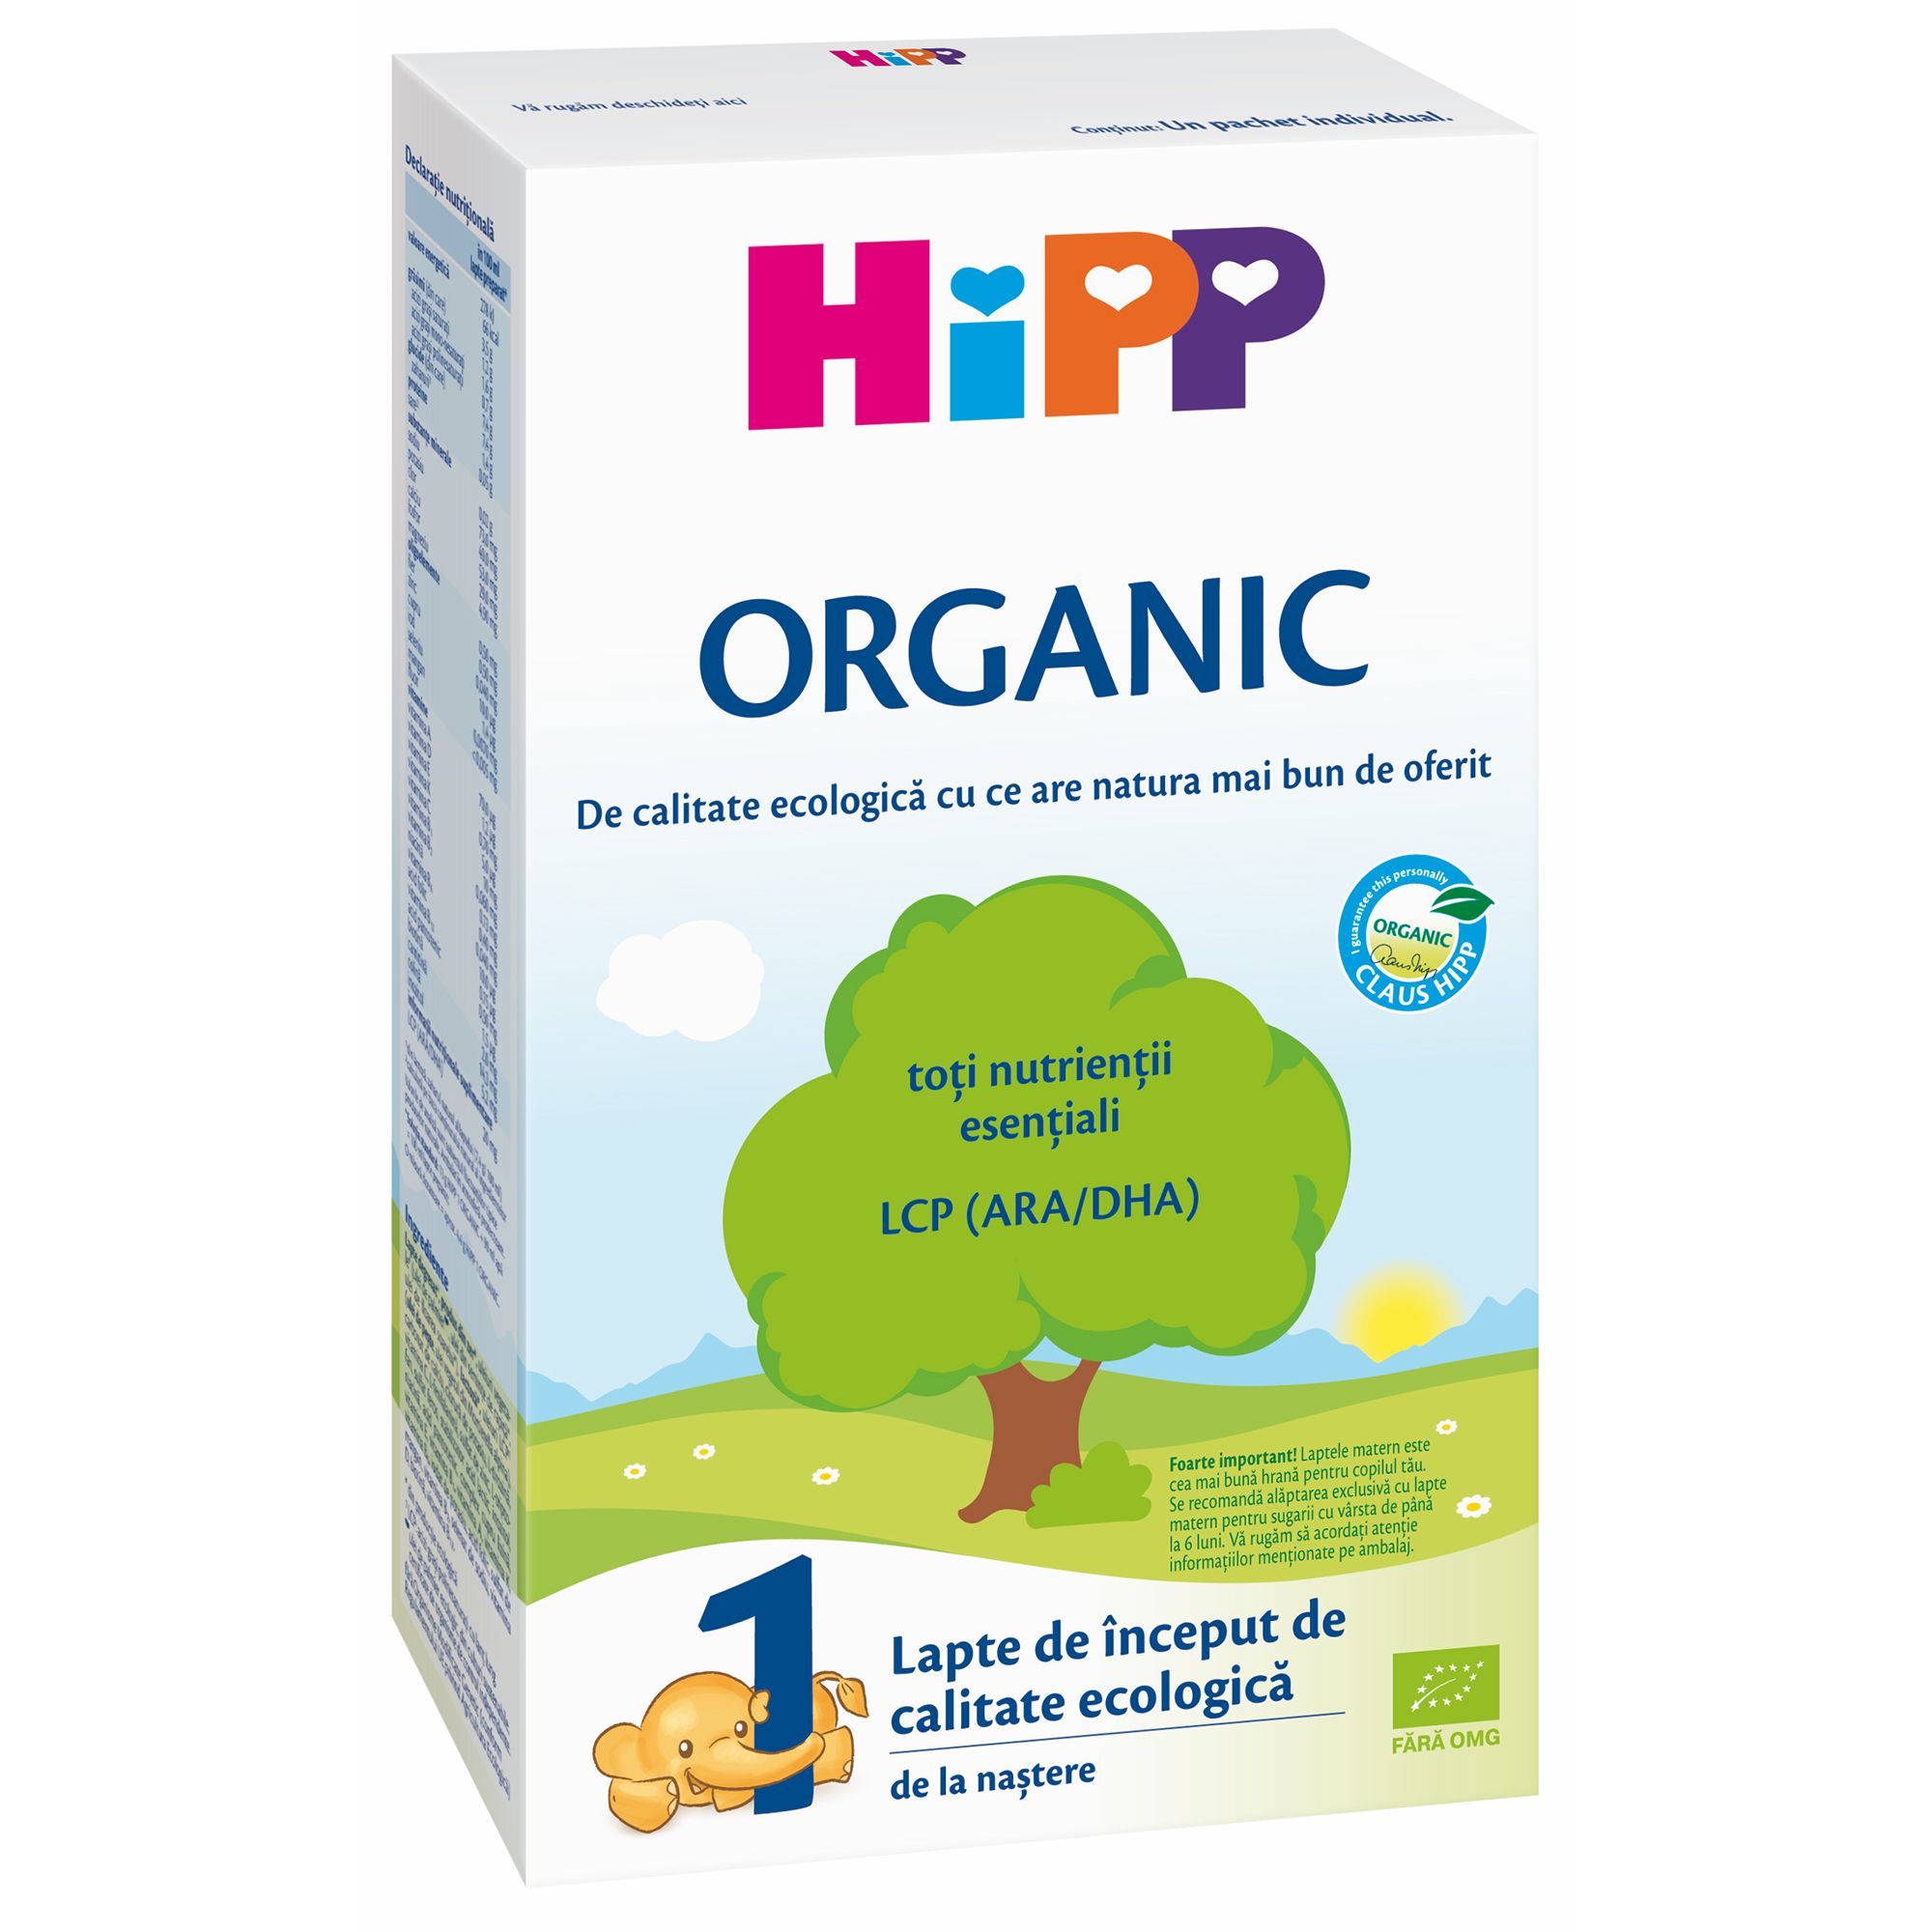 HIPP LAPTE PRAF 1 ORGANIC 300G imagine 2021 Helpnet.ro